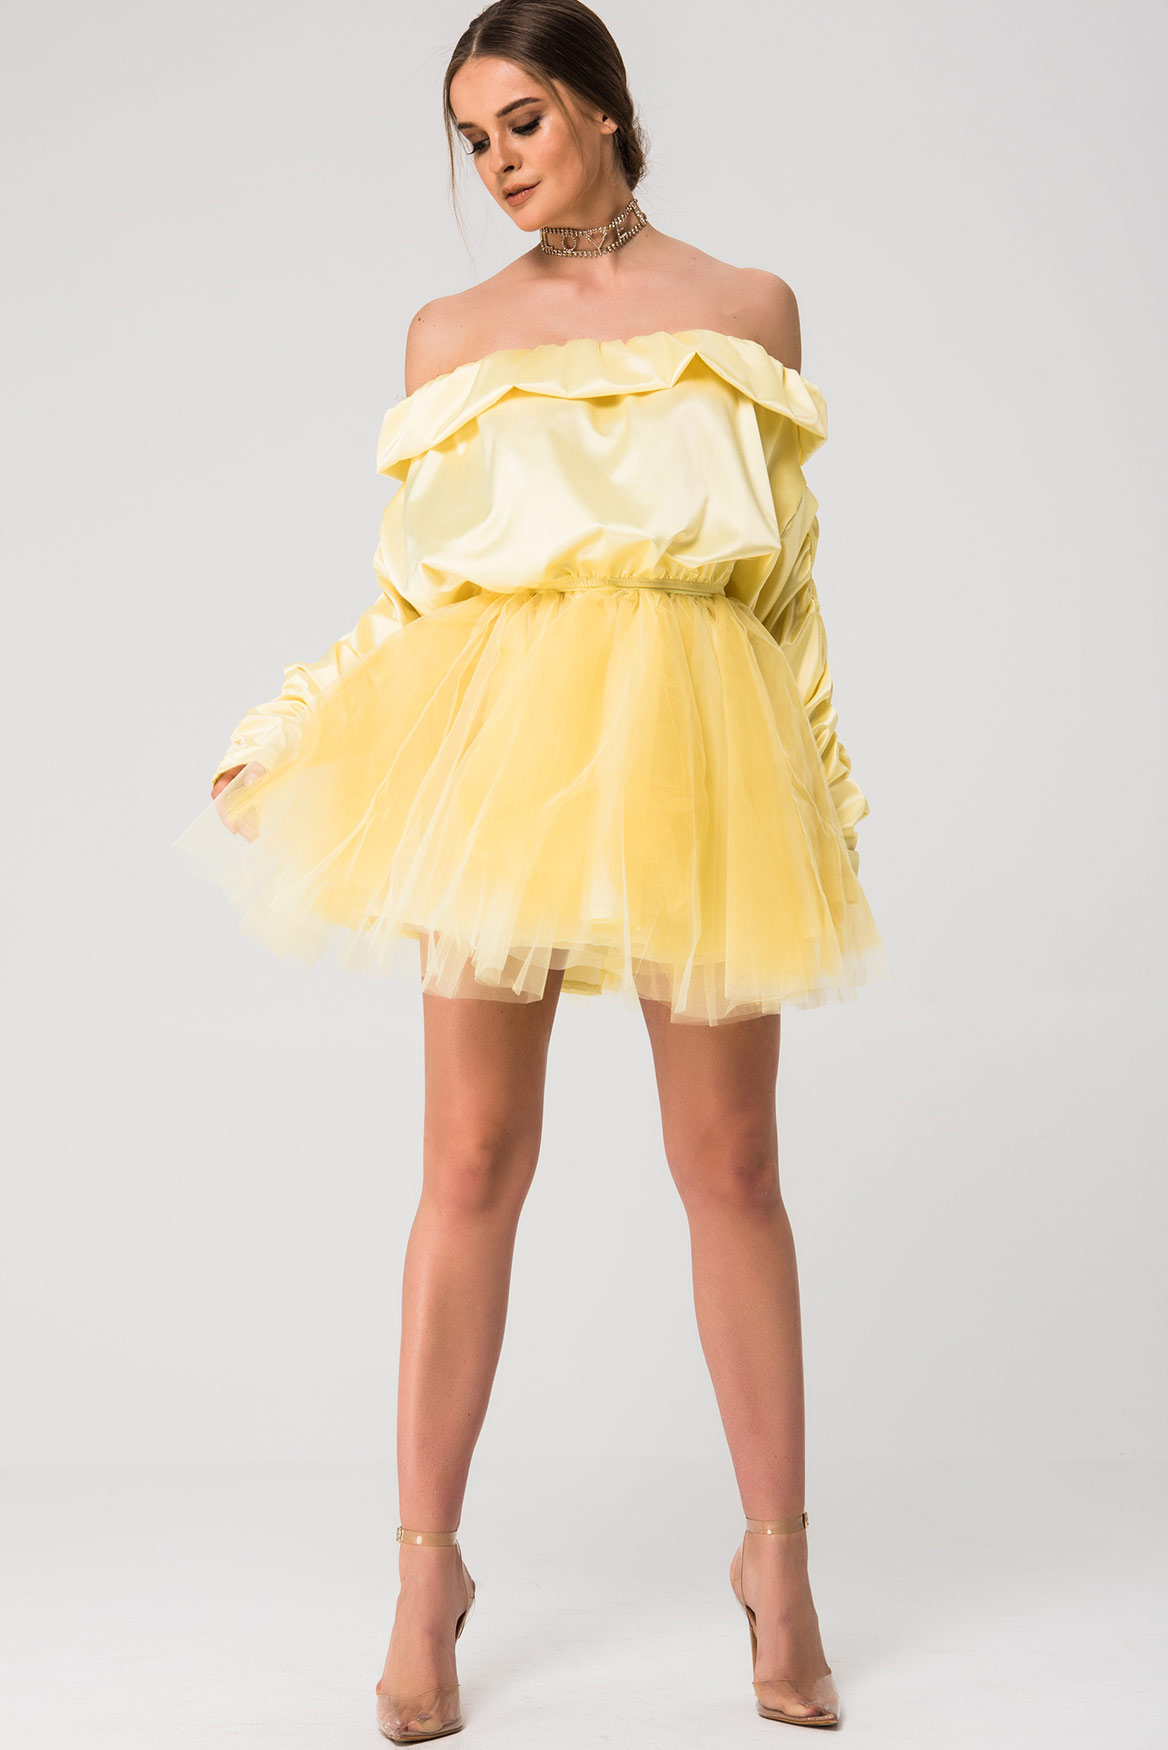 Wholesale Yellow Ballerina Skirt